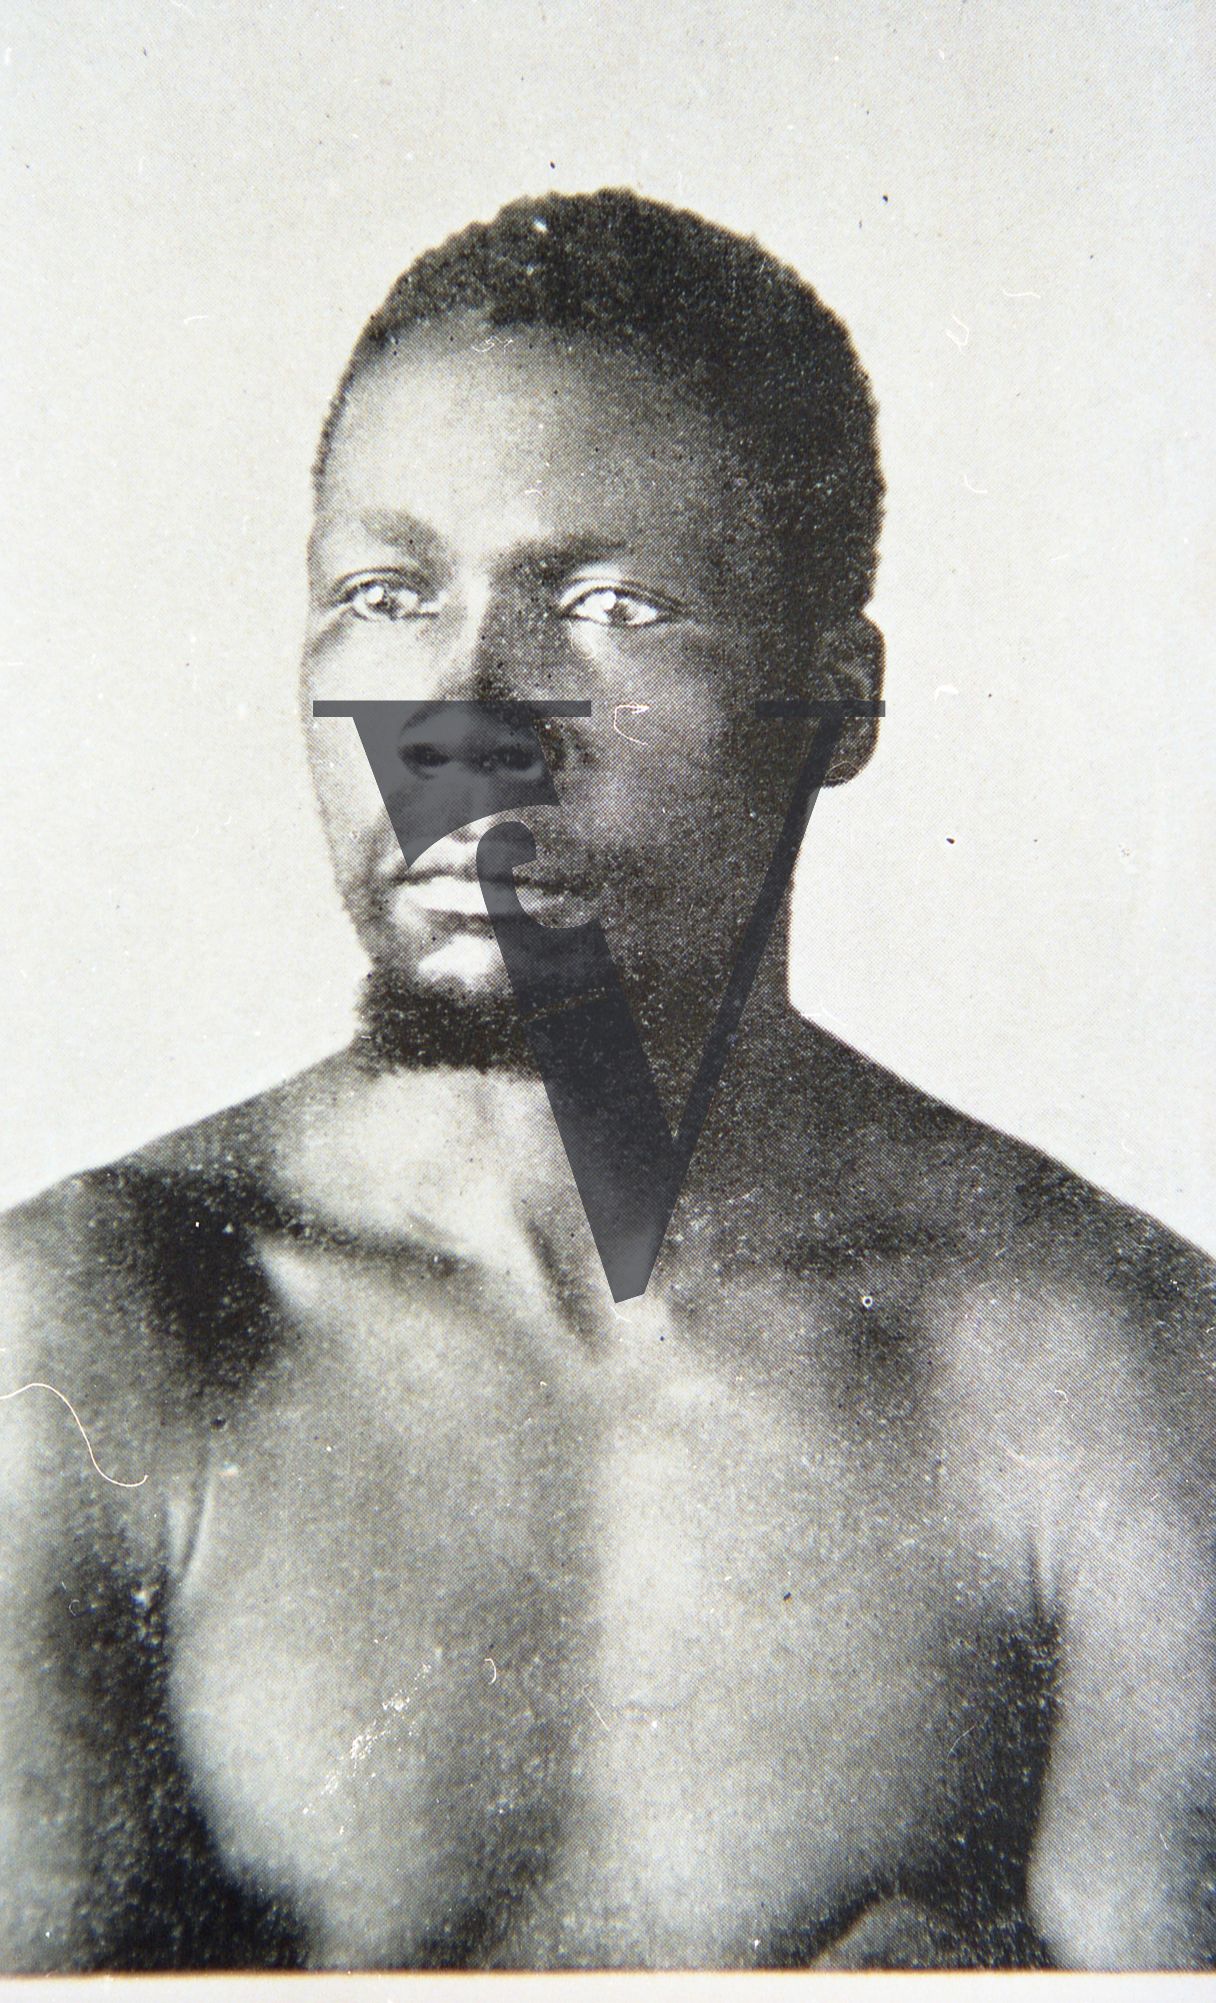 Rhodesia, historical image, man, portrait.